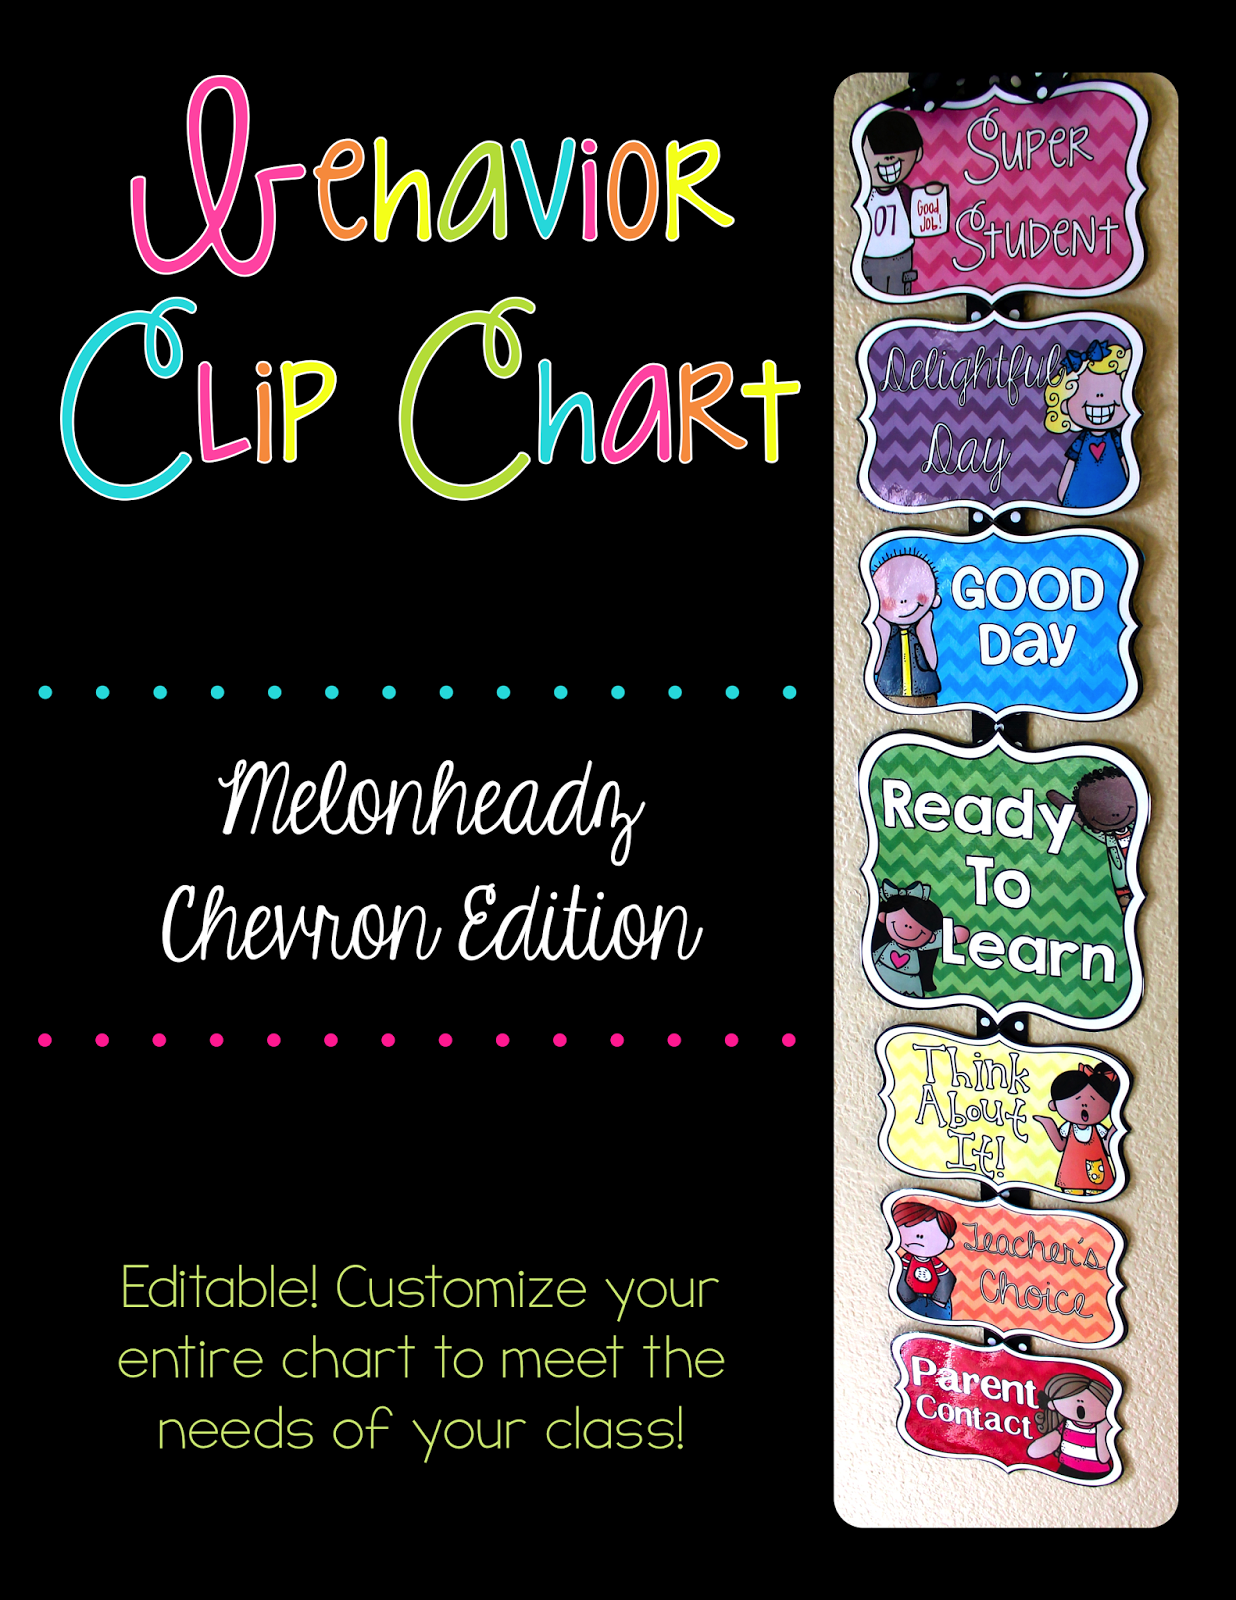 http://www.teacherspayteachers.com/Product/Editable-Behavior-Chart-Melonheadz-Chevron-Edition-1336807